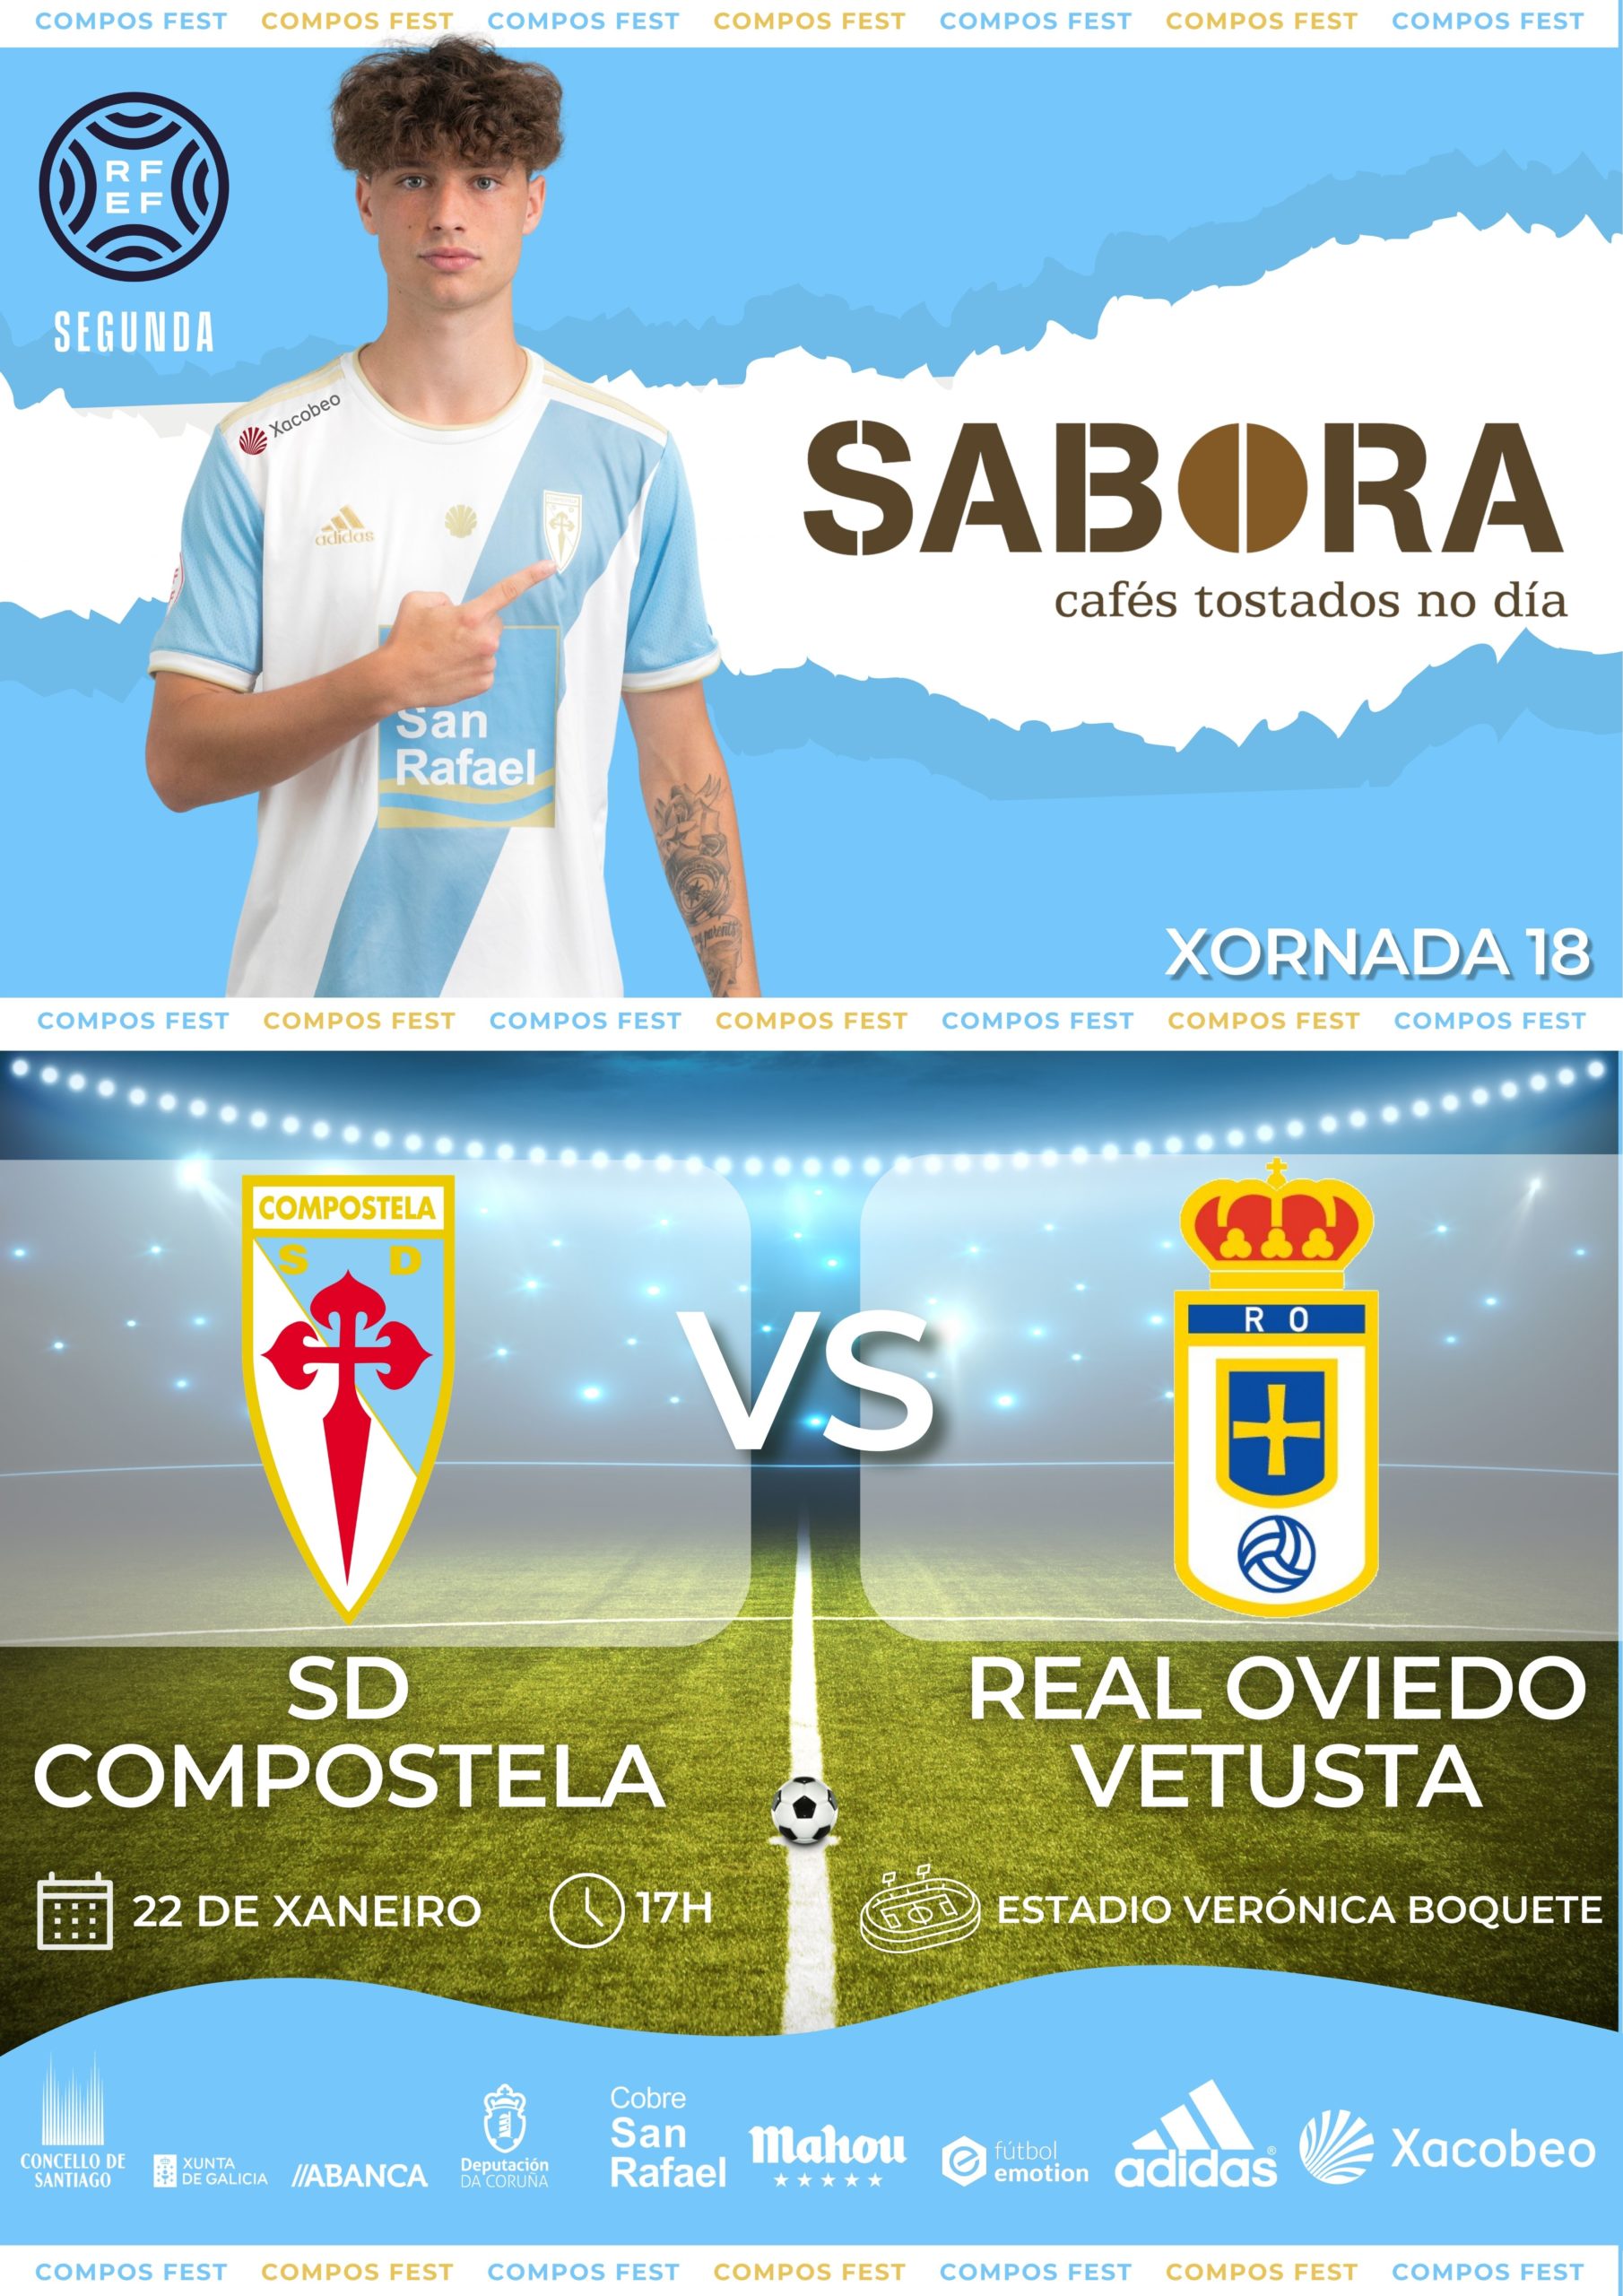 Xornada 18 vs Oviedo Vetusta